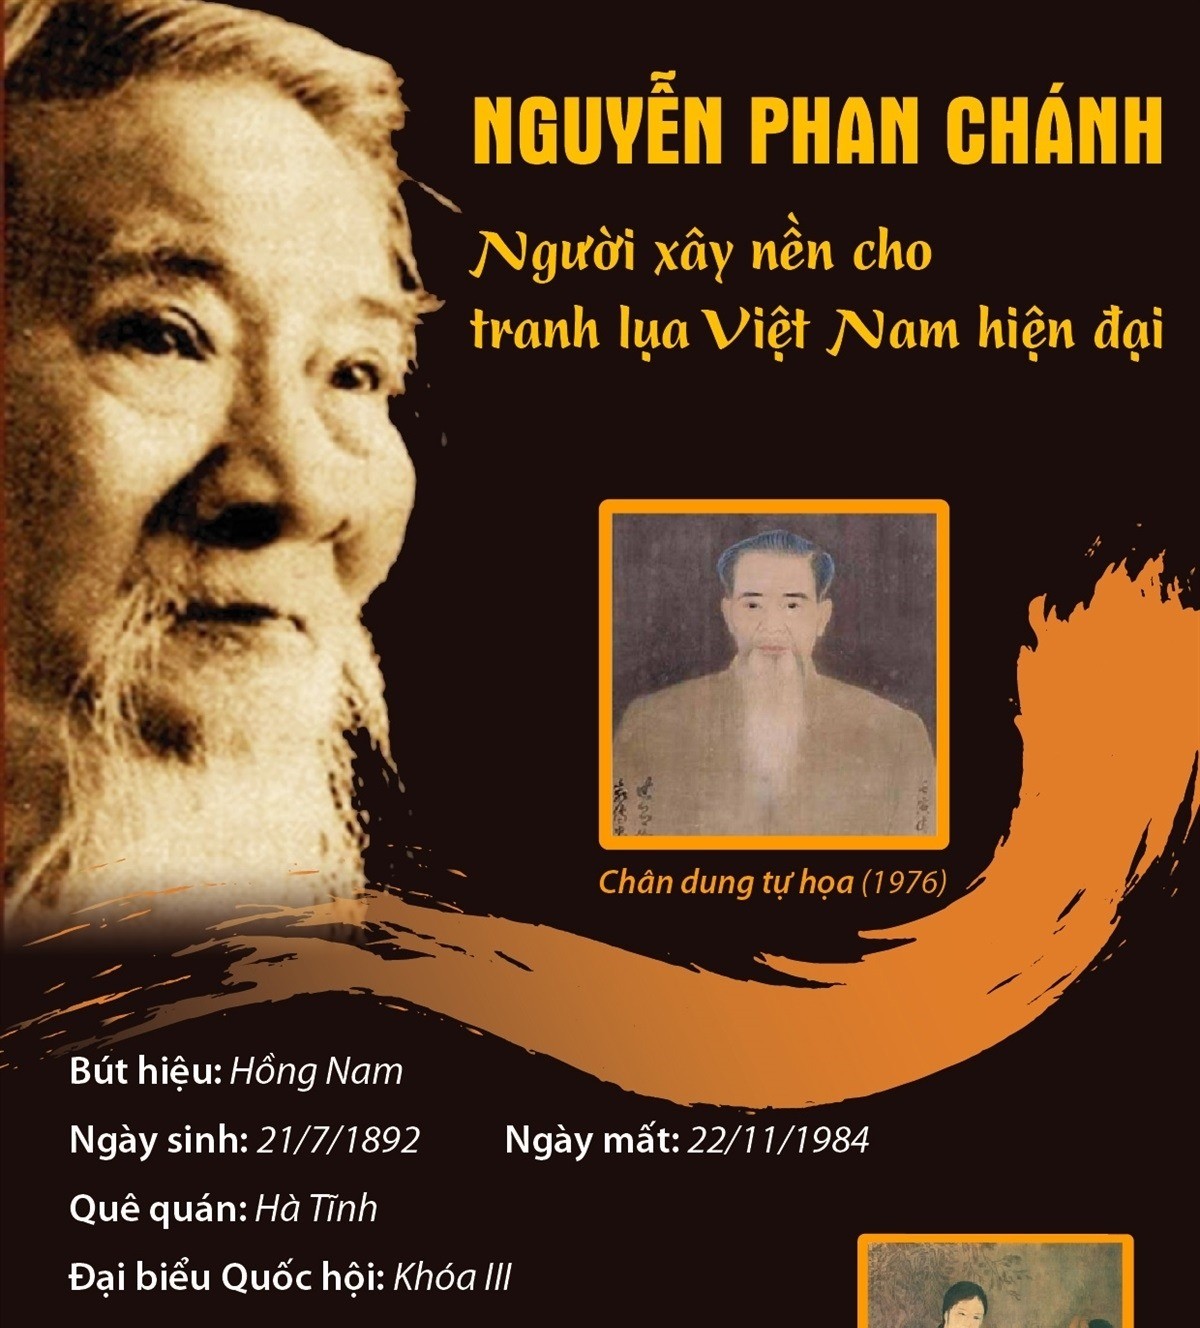 nguyen-phan-chanh-nguoi-dua-tranh-lua-viet-nam-ra-the-gioi-5-1658393335.jpg